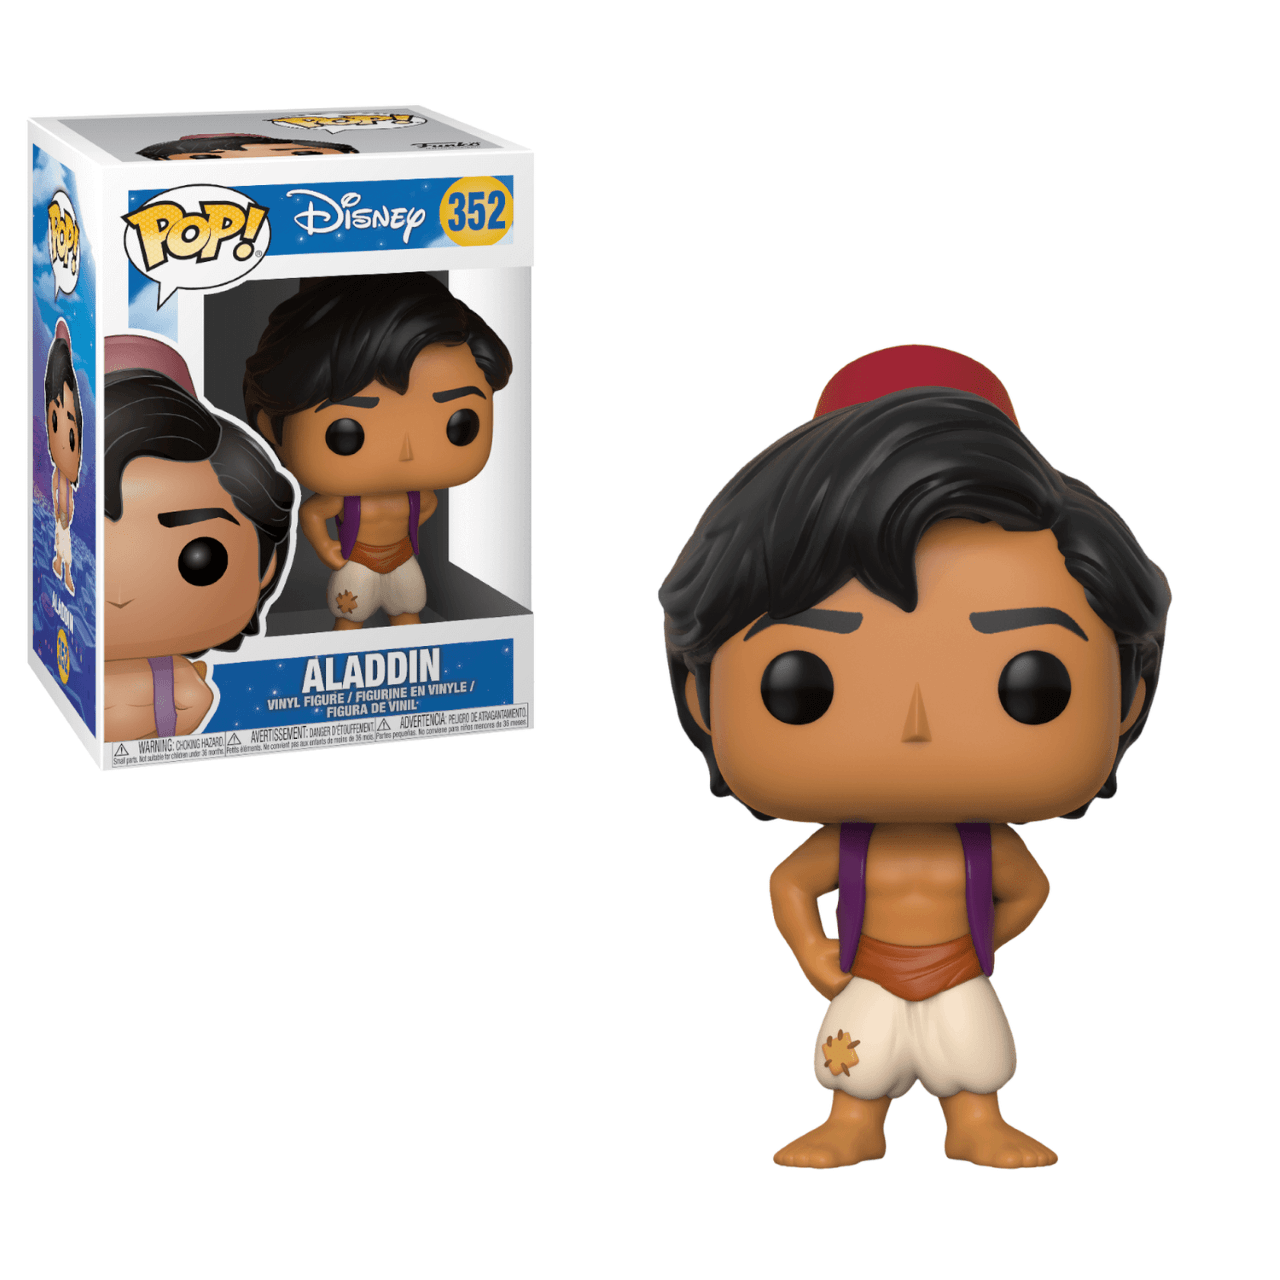 Pop! Disney's Aladdin VINYL FIGURE Media 2 of 2